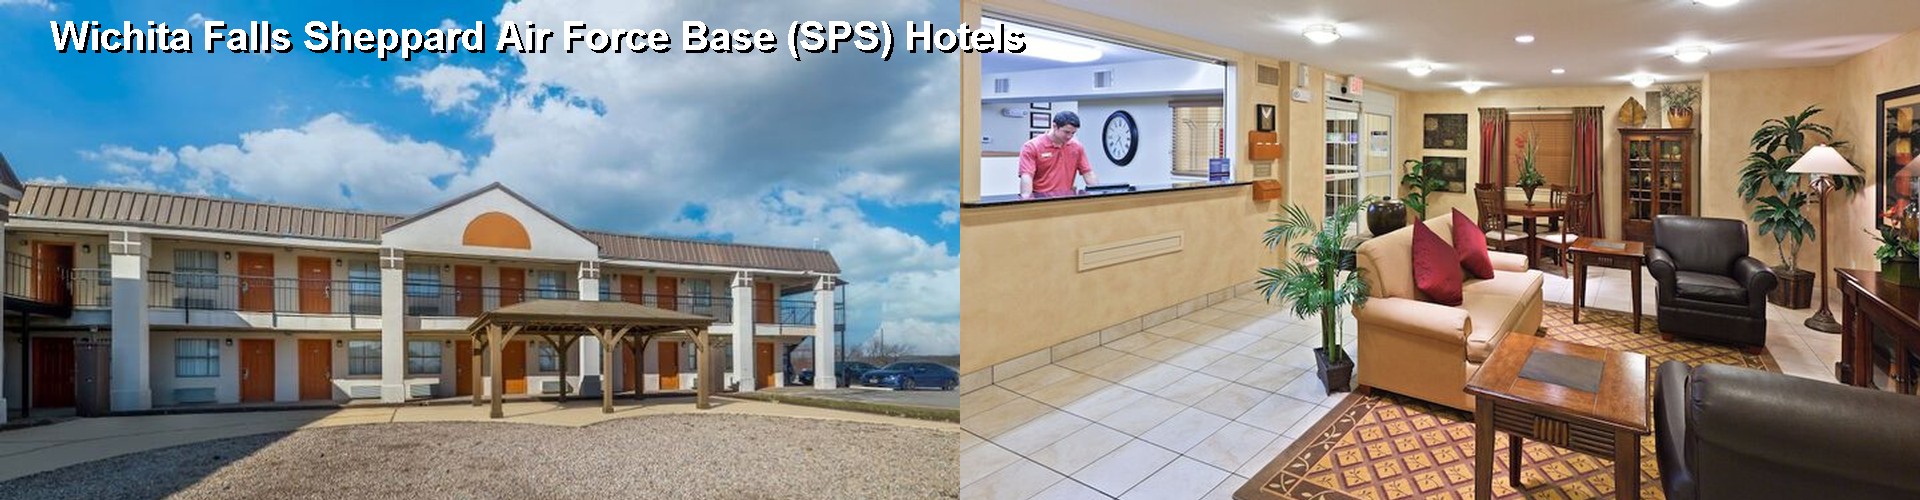 3 Best Hotels near Wichita Falls Sheppard Air Force Base (SPS)